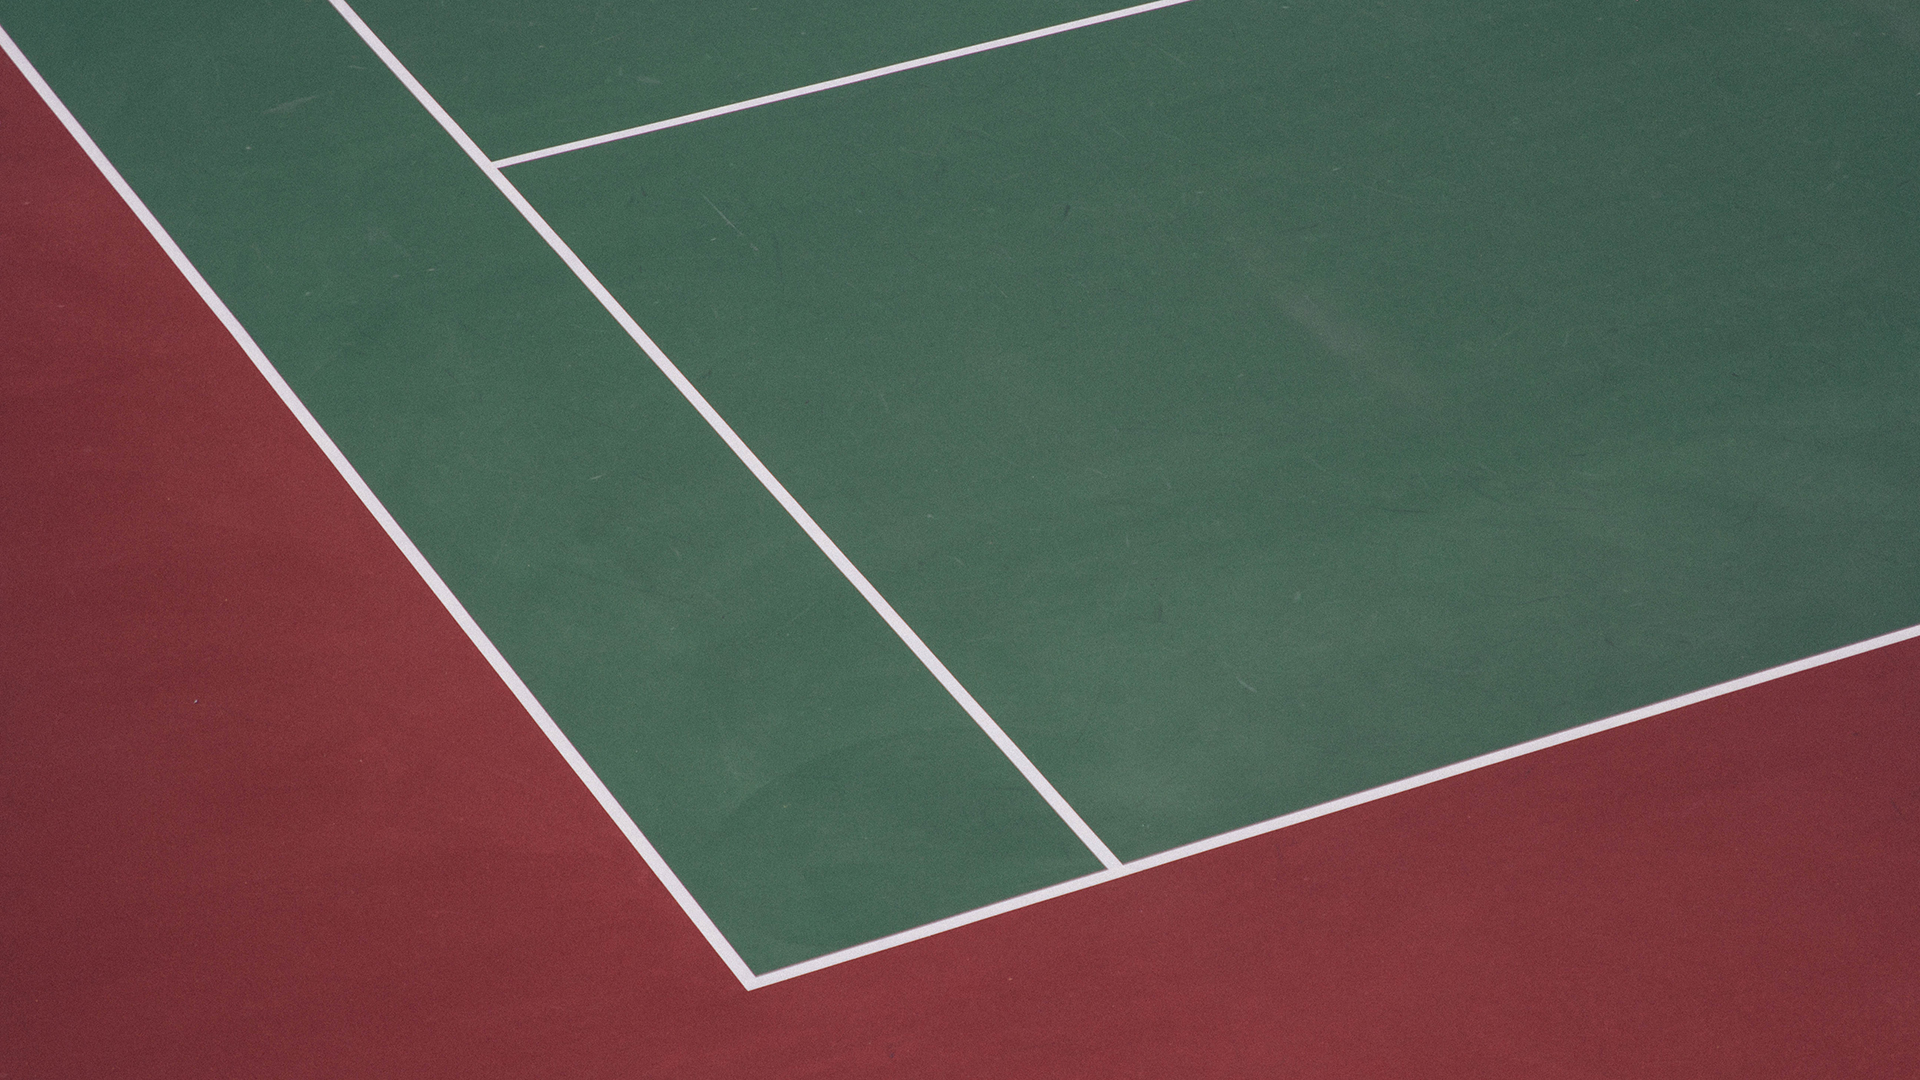 General 1920x1080 tennis tennis court sport lines minimalism